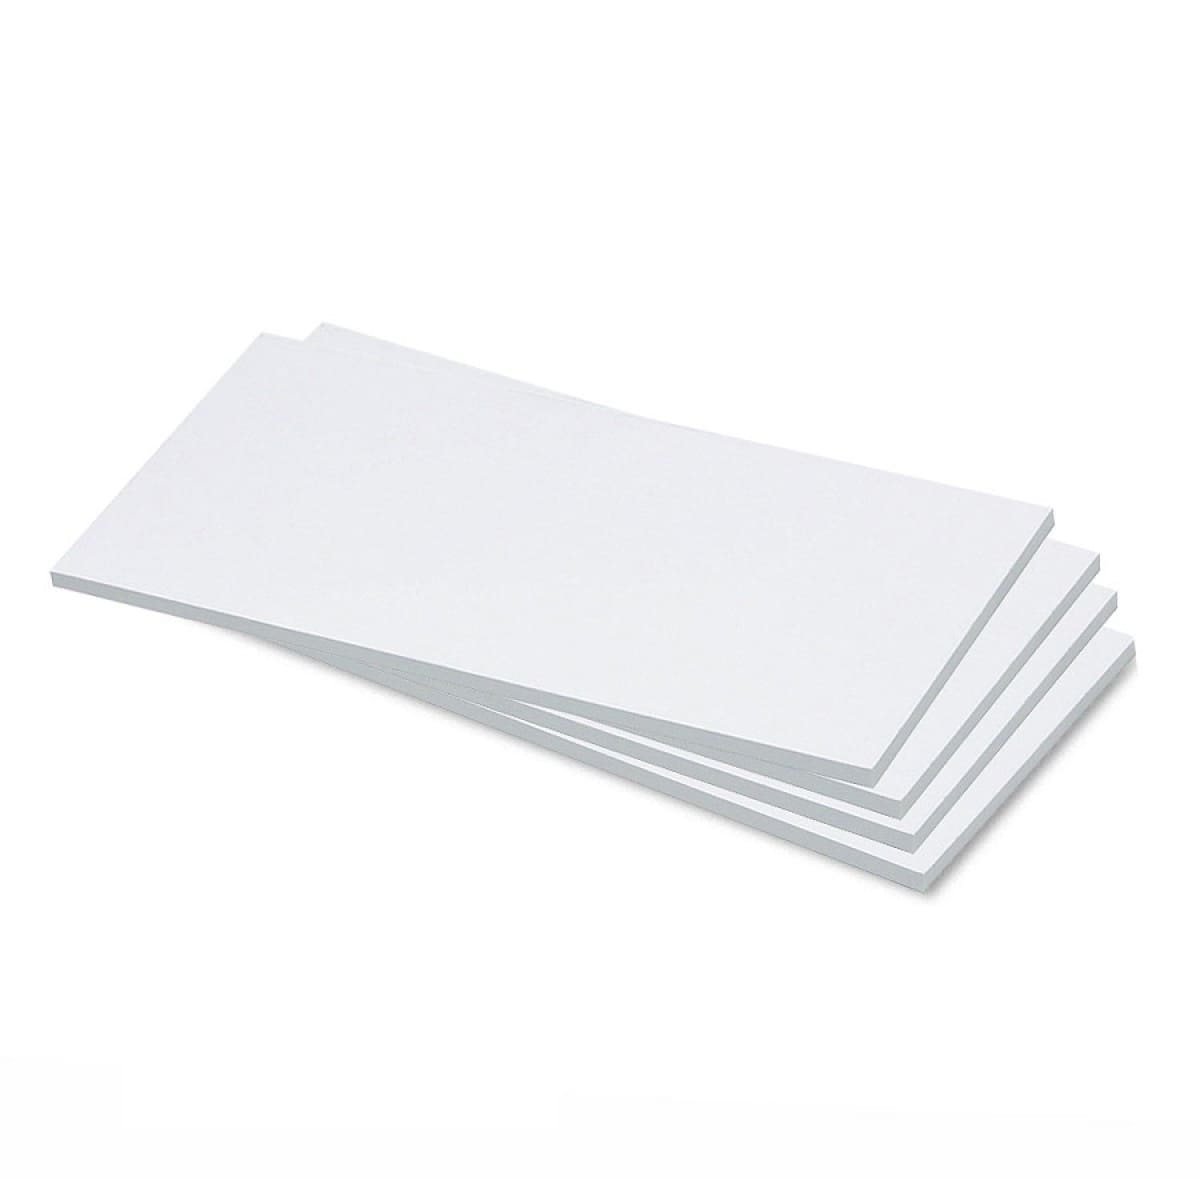 Rechteck-Karten, Stick-It, 100 Stück, uni- 1 weiß